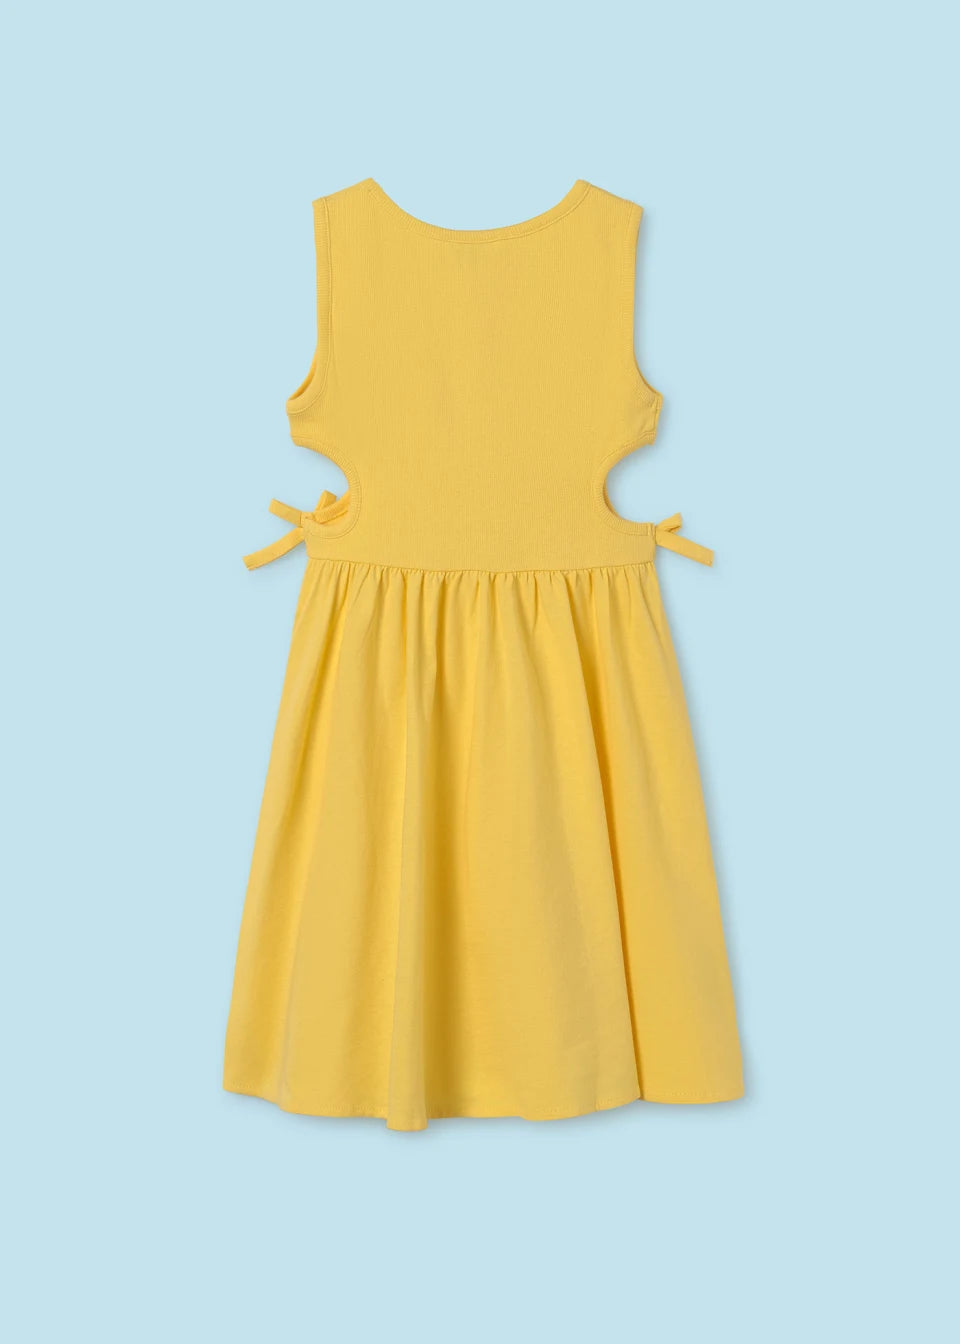 Yellow dress for kid girl